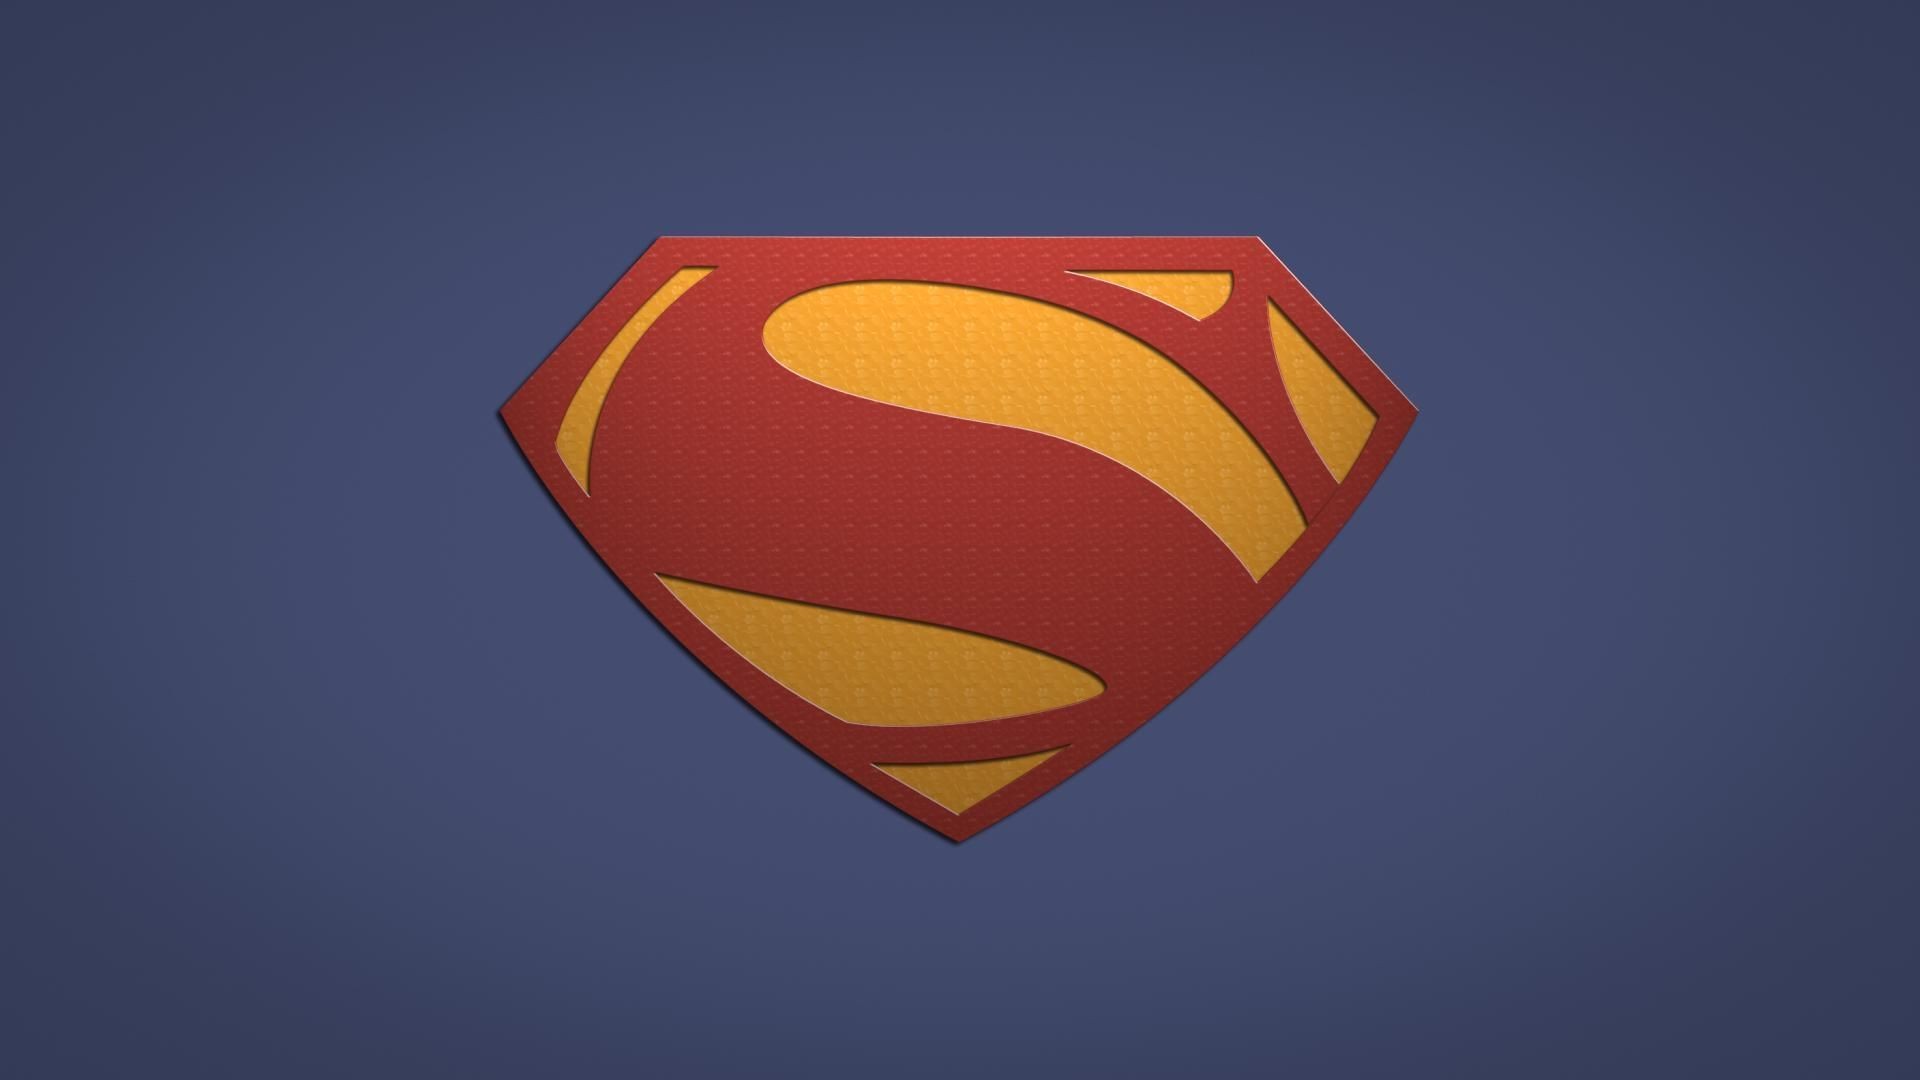 Superman Logo wallpaper ·① Download free amazing High ...